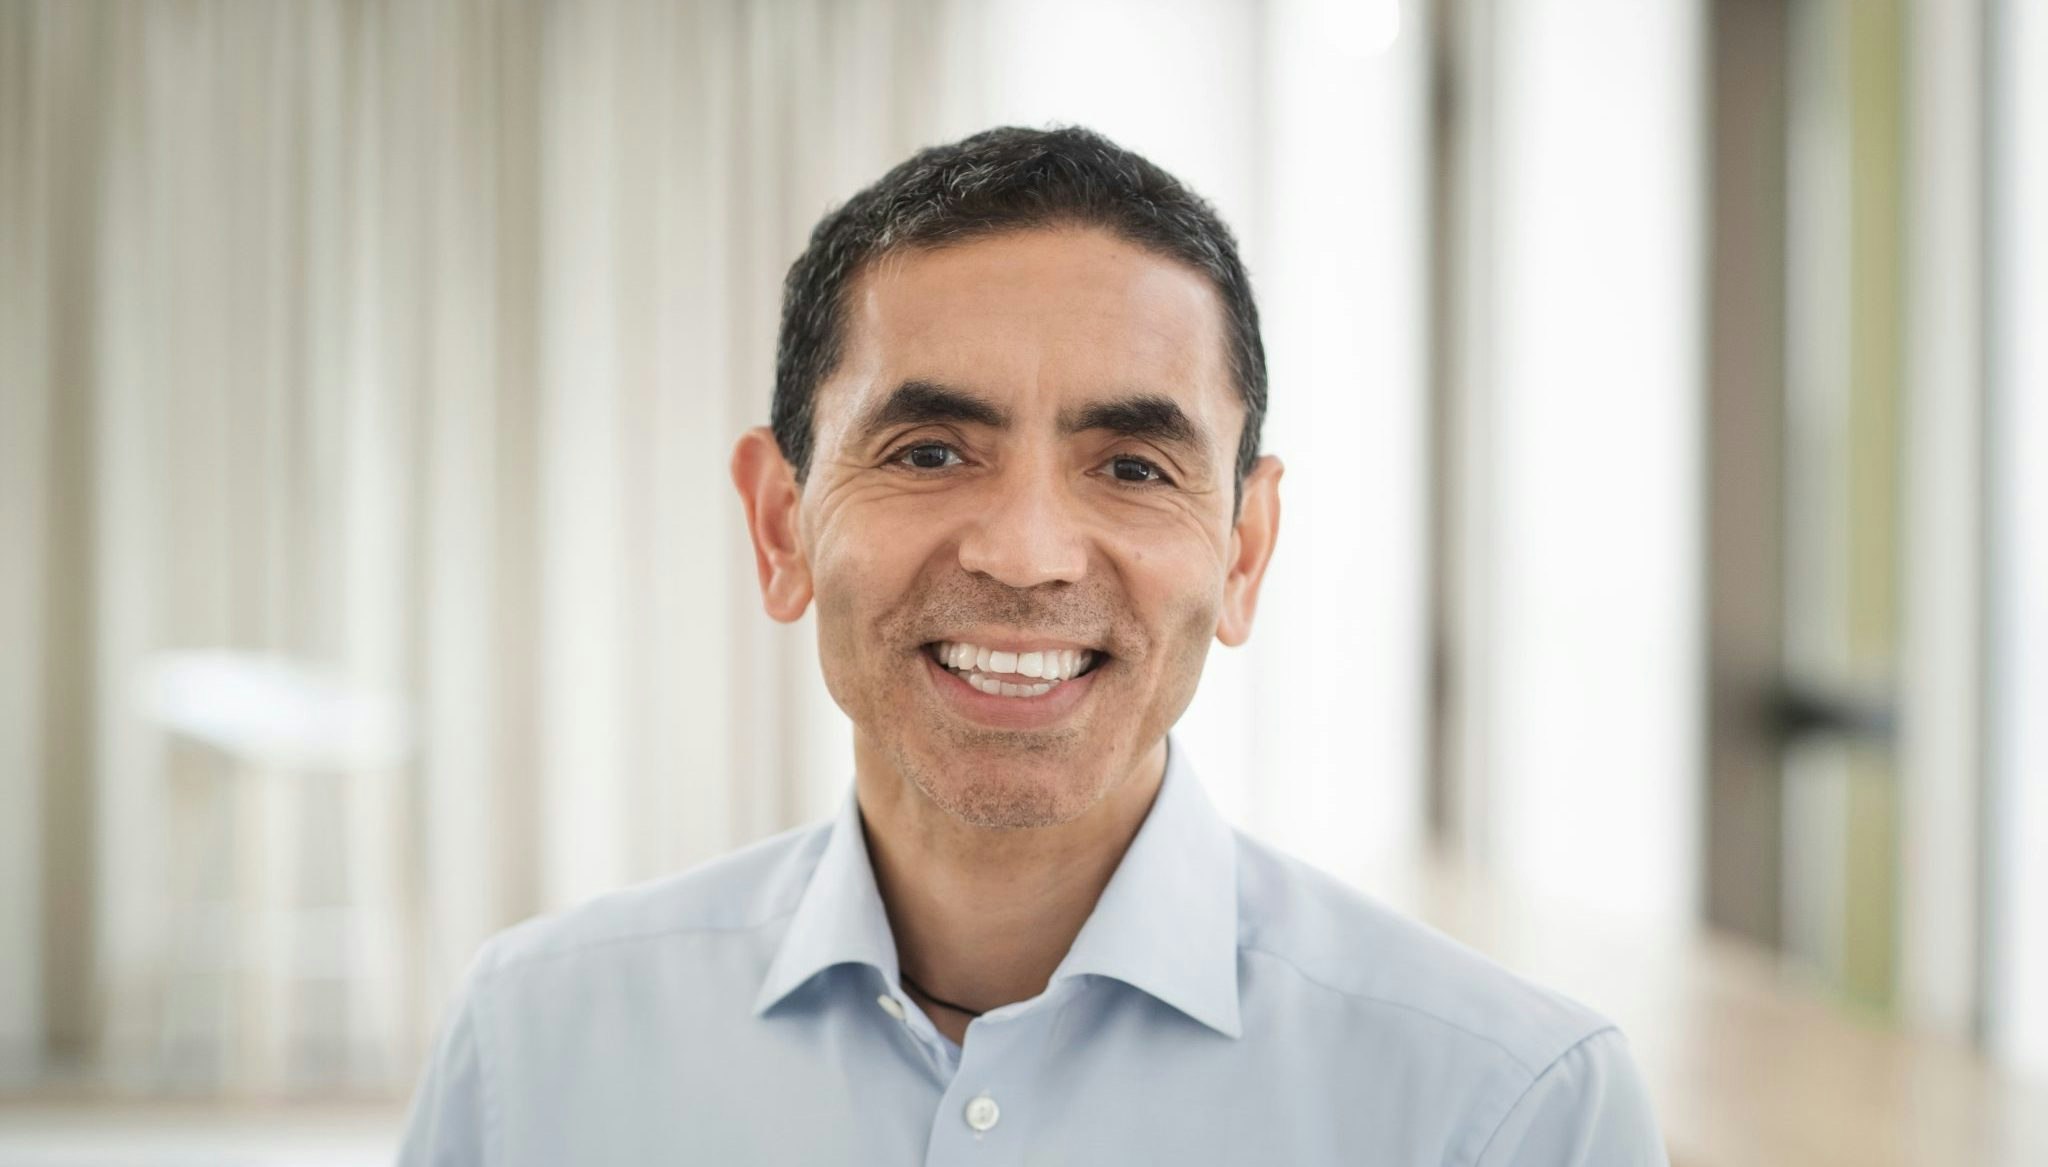 Ugur Sahin, CEO of BioNTech